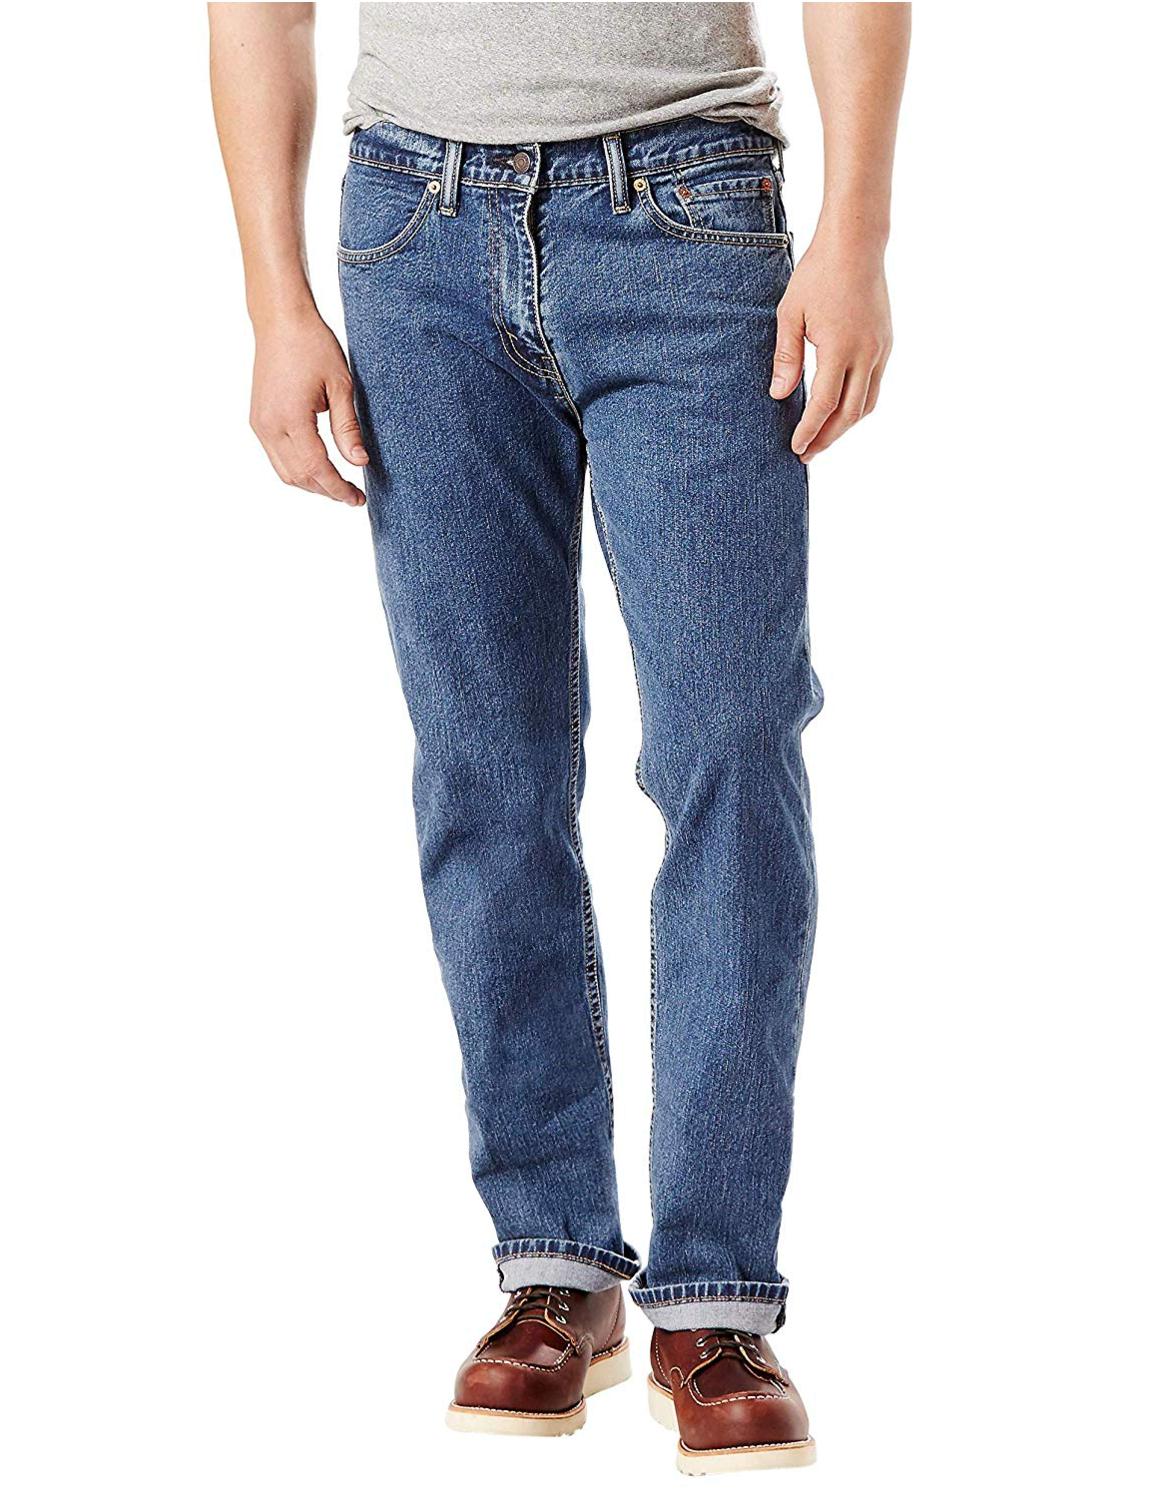 Levi's Men's 505 Regular Fit Jeans, Stonewash - Stretch,, Blue, Size ...